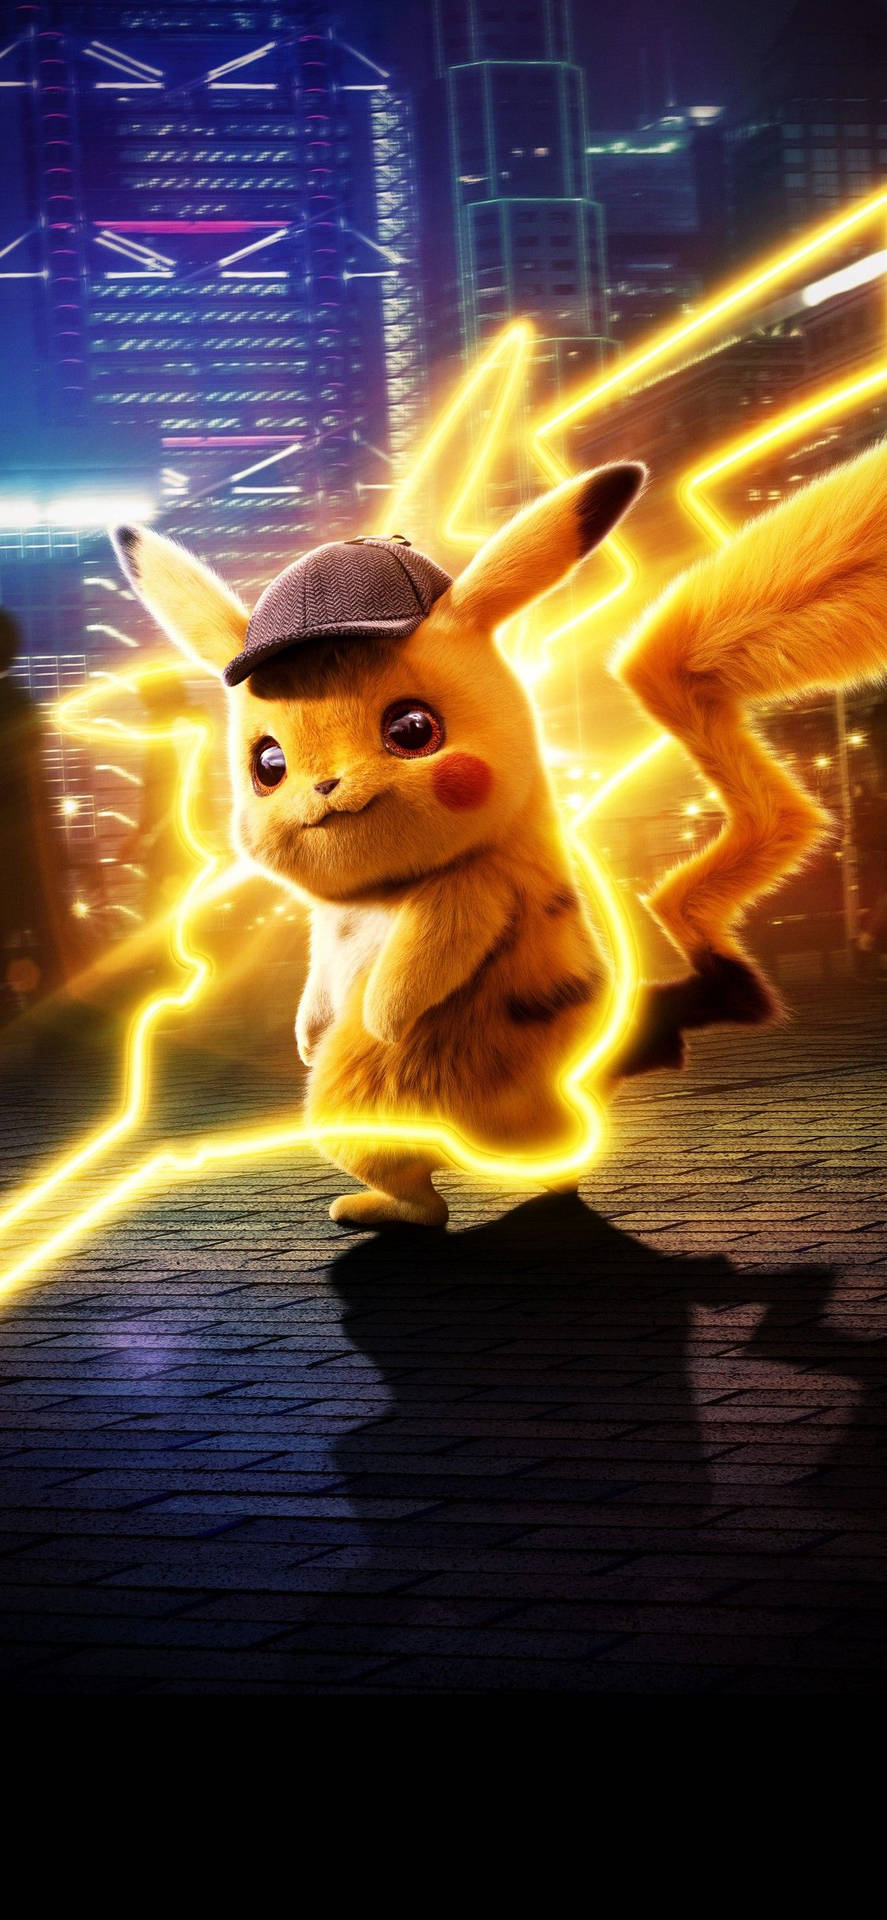 Pikachu 3d Detective Pikachu With Lightning